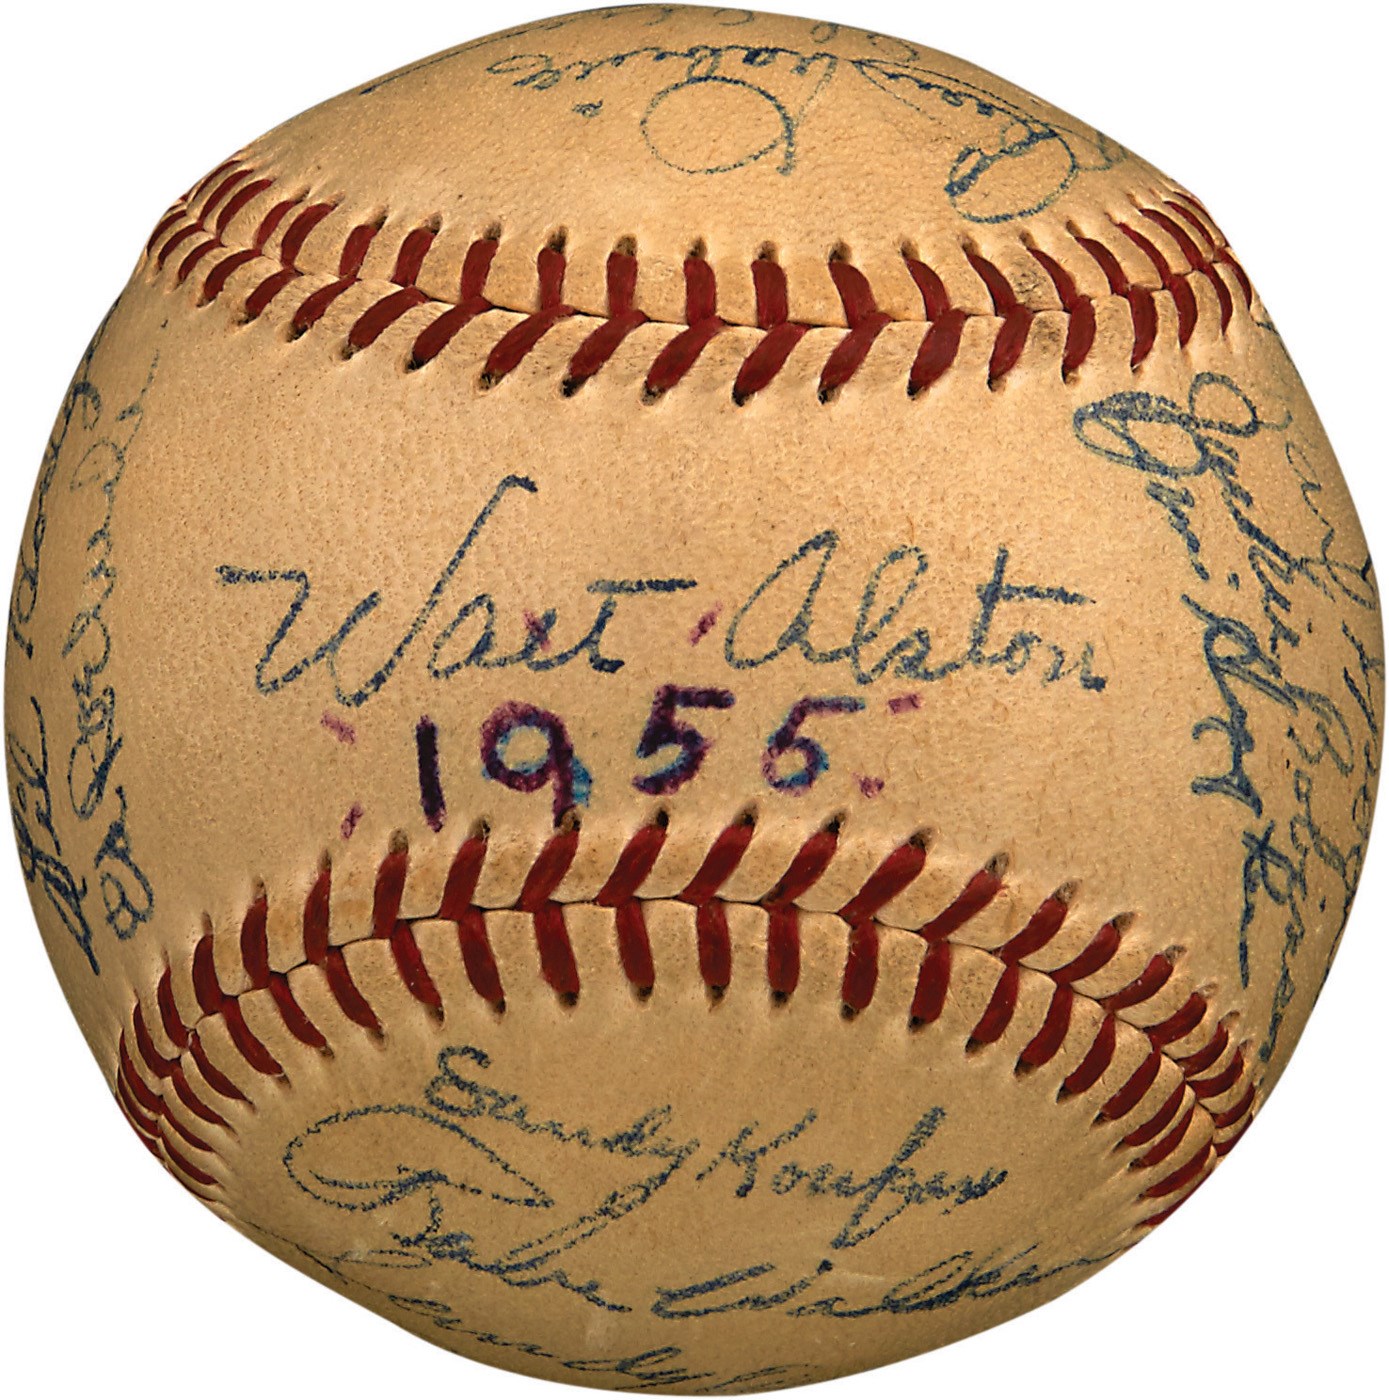 Jackie Robinson & Brooklyn Dodgers - Beautiful 1955 Brooklyn Dodgers Team-Signed Baseball (PSA)